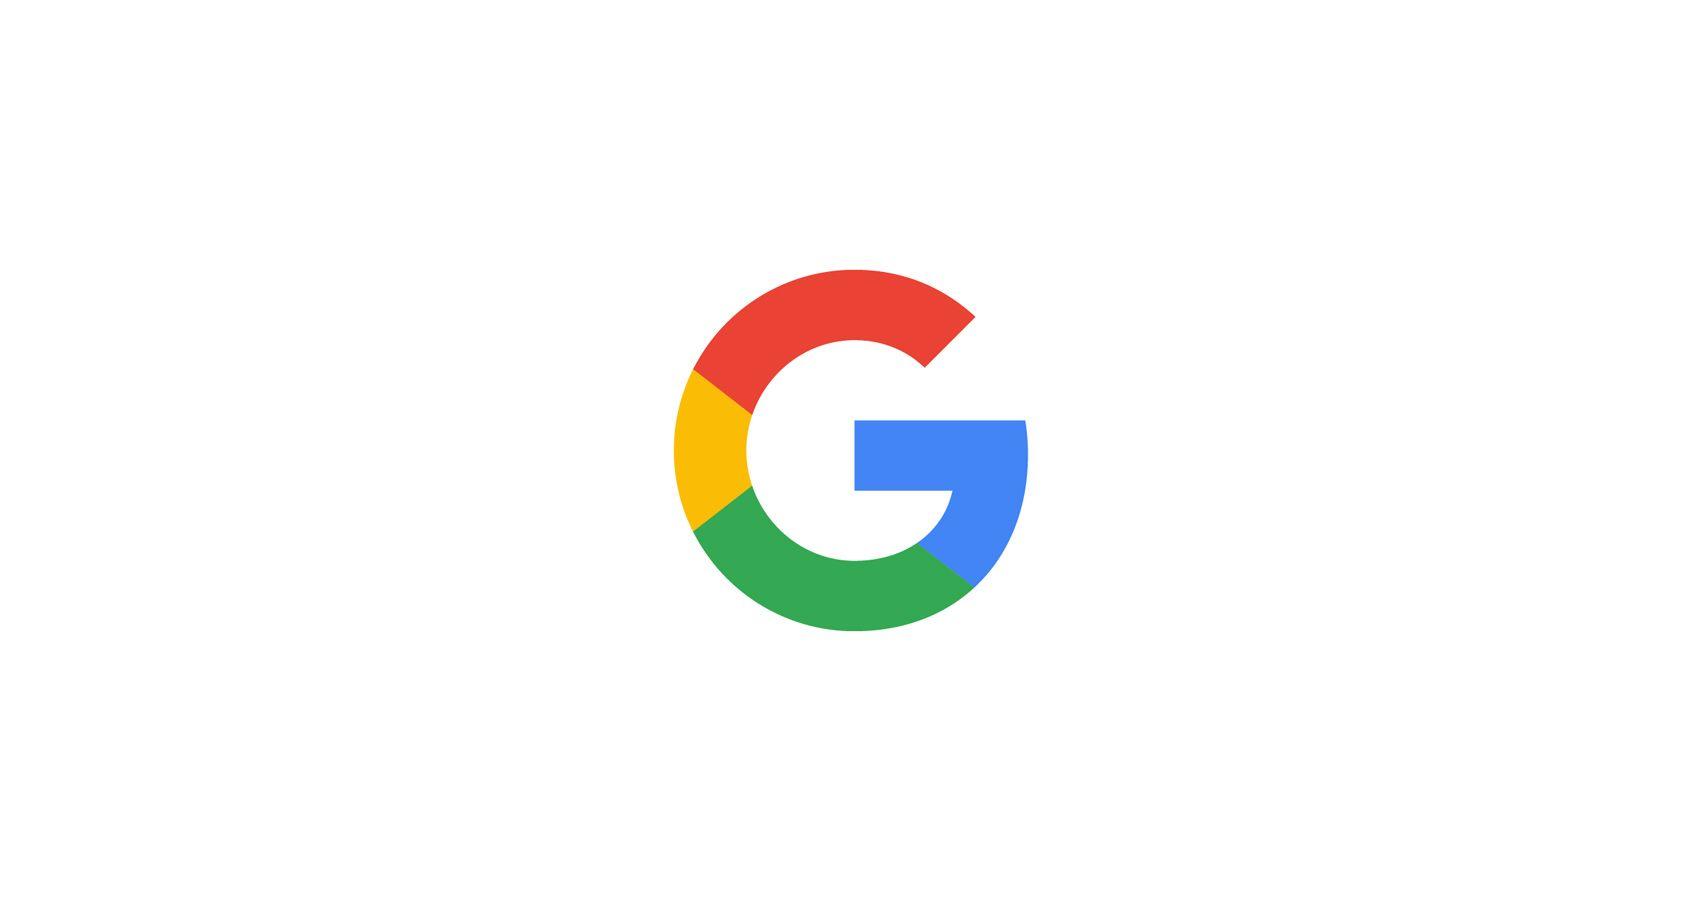 Google Logo - Evolving the Google Identity